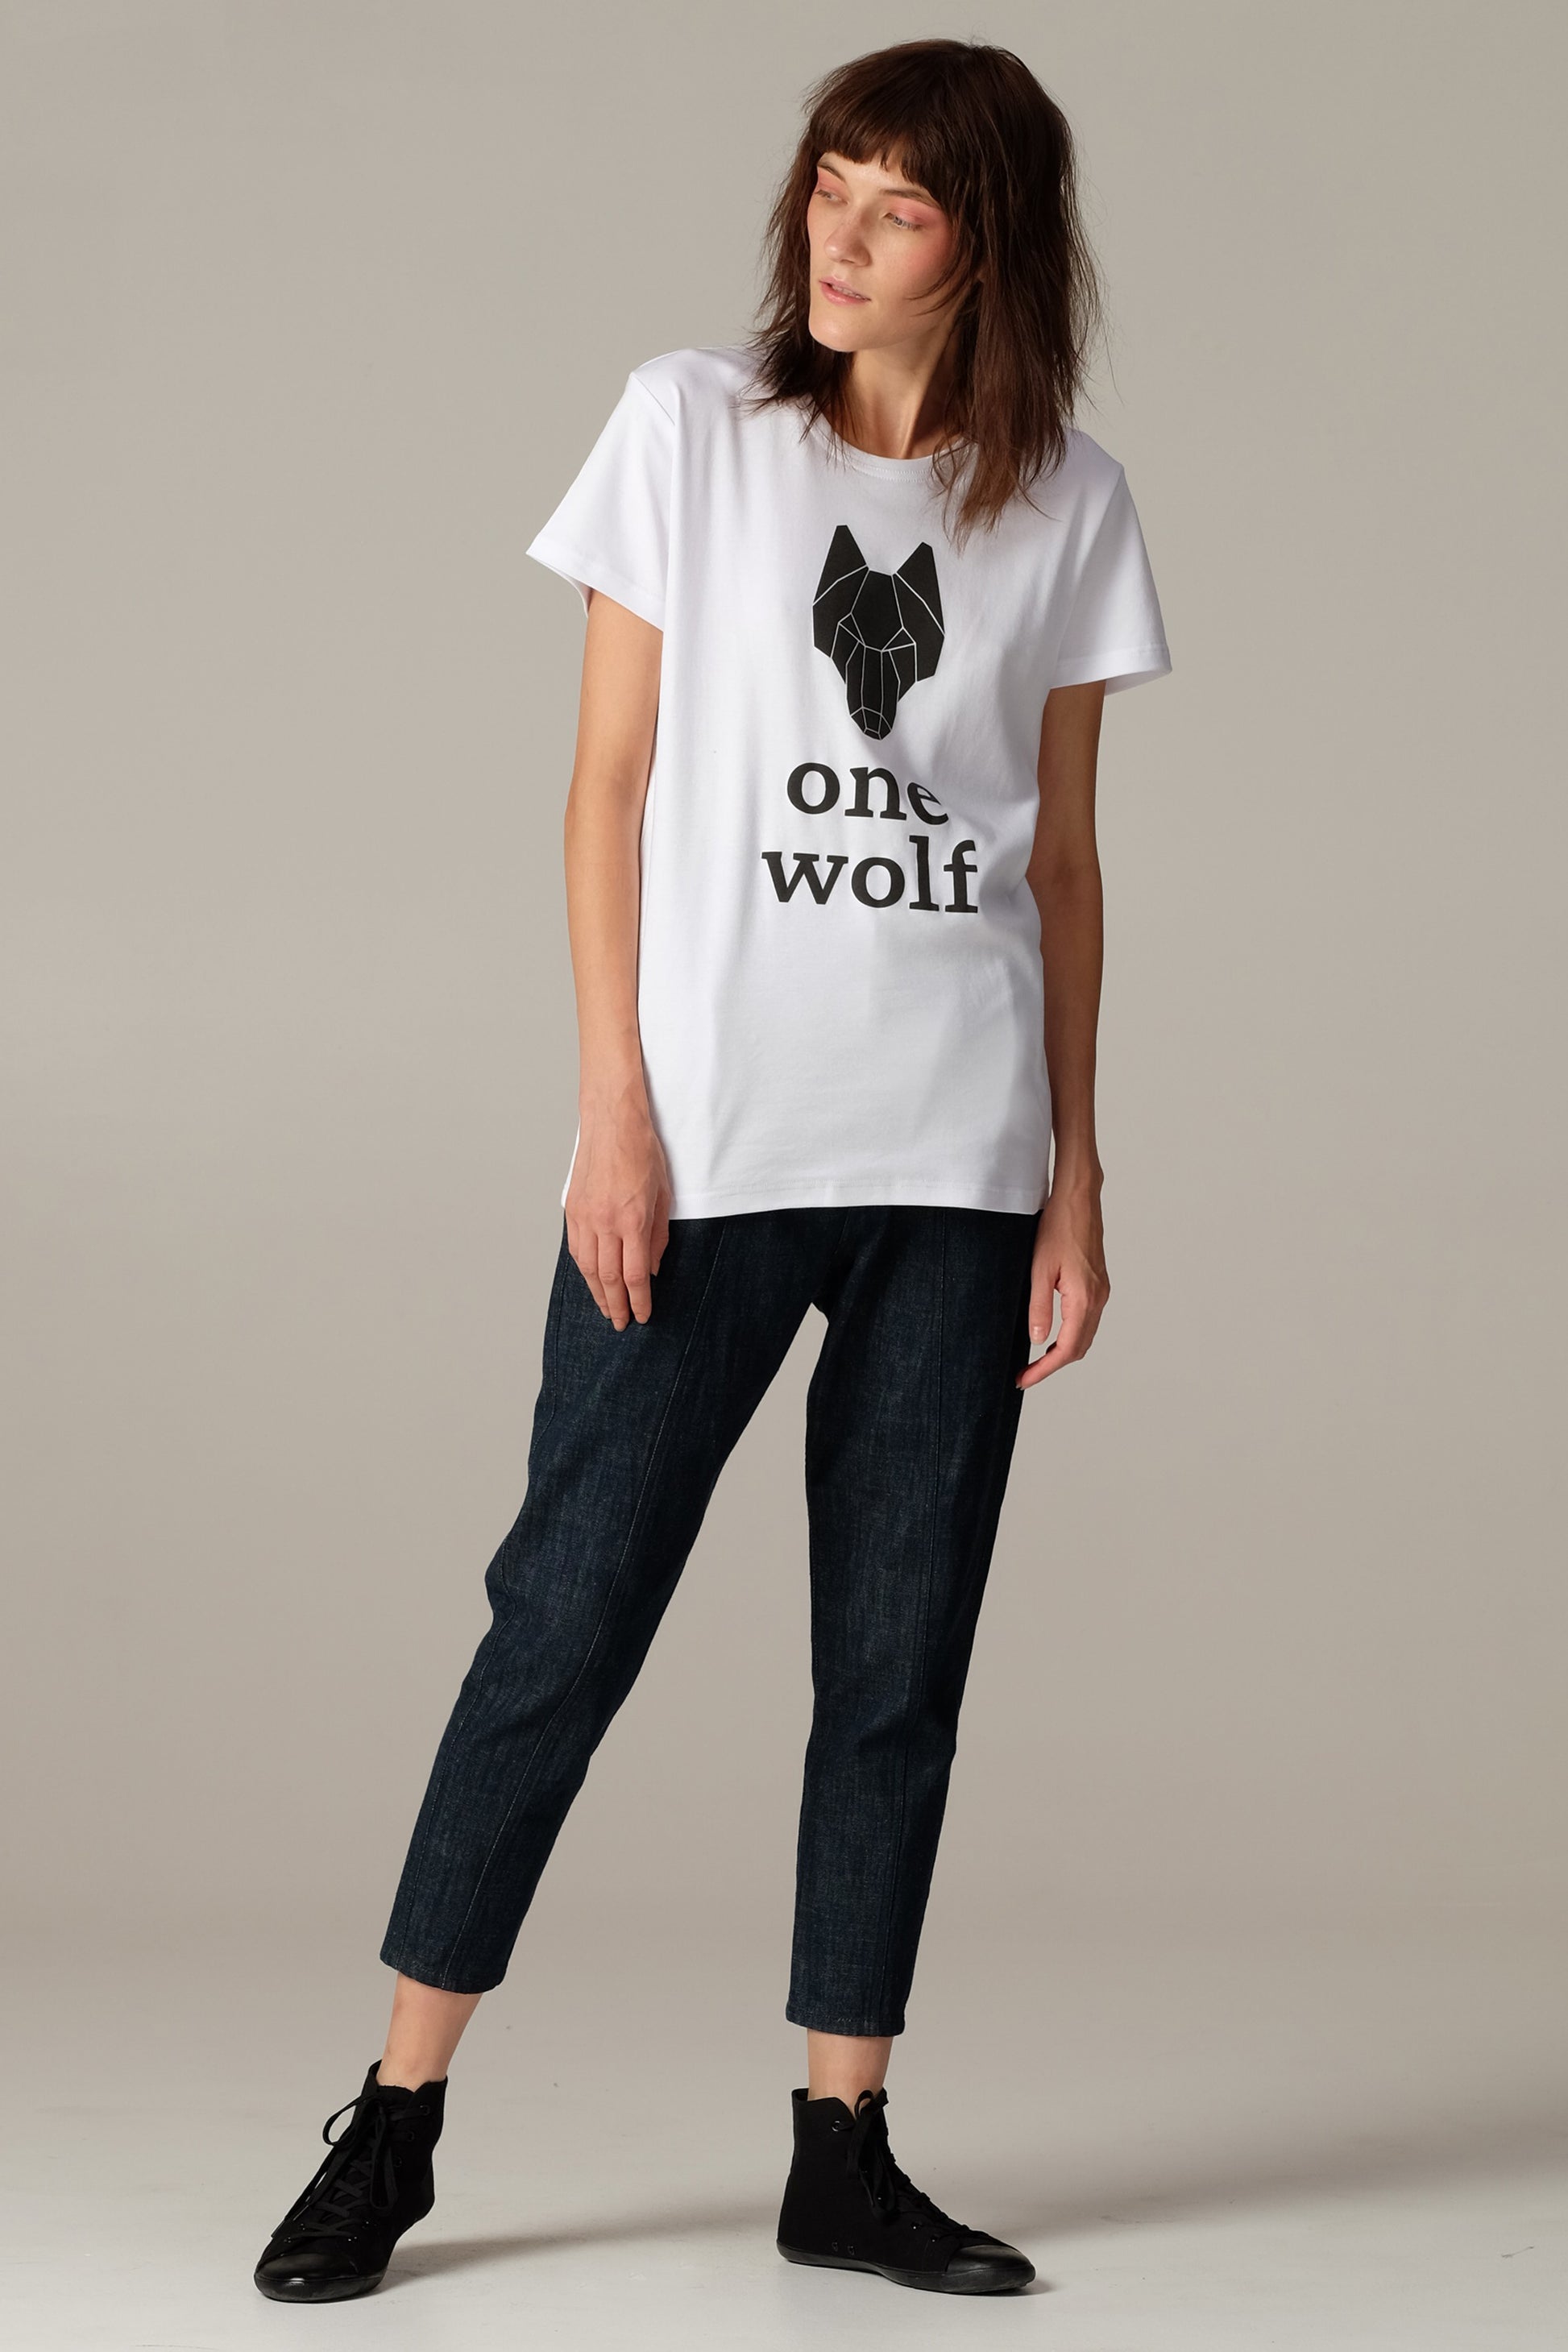 One Wolf logo T-Shirt white/black - One Wolf